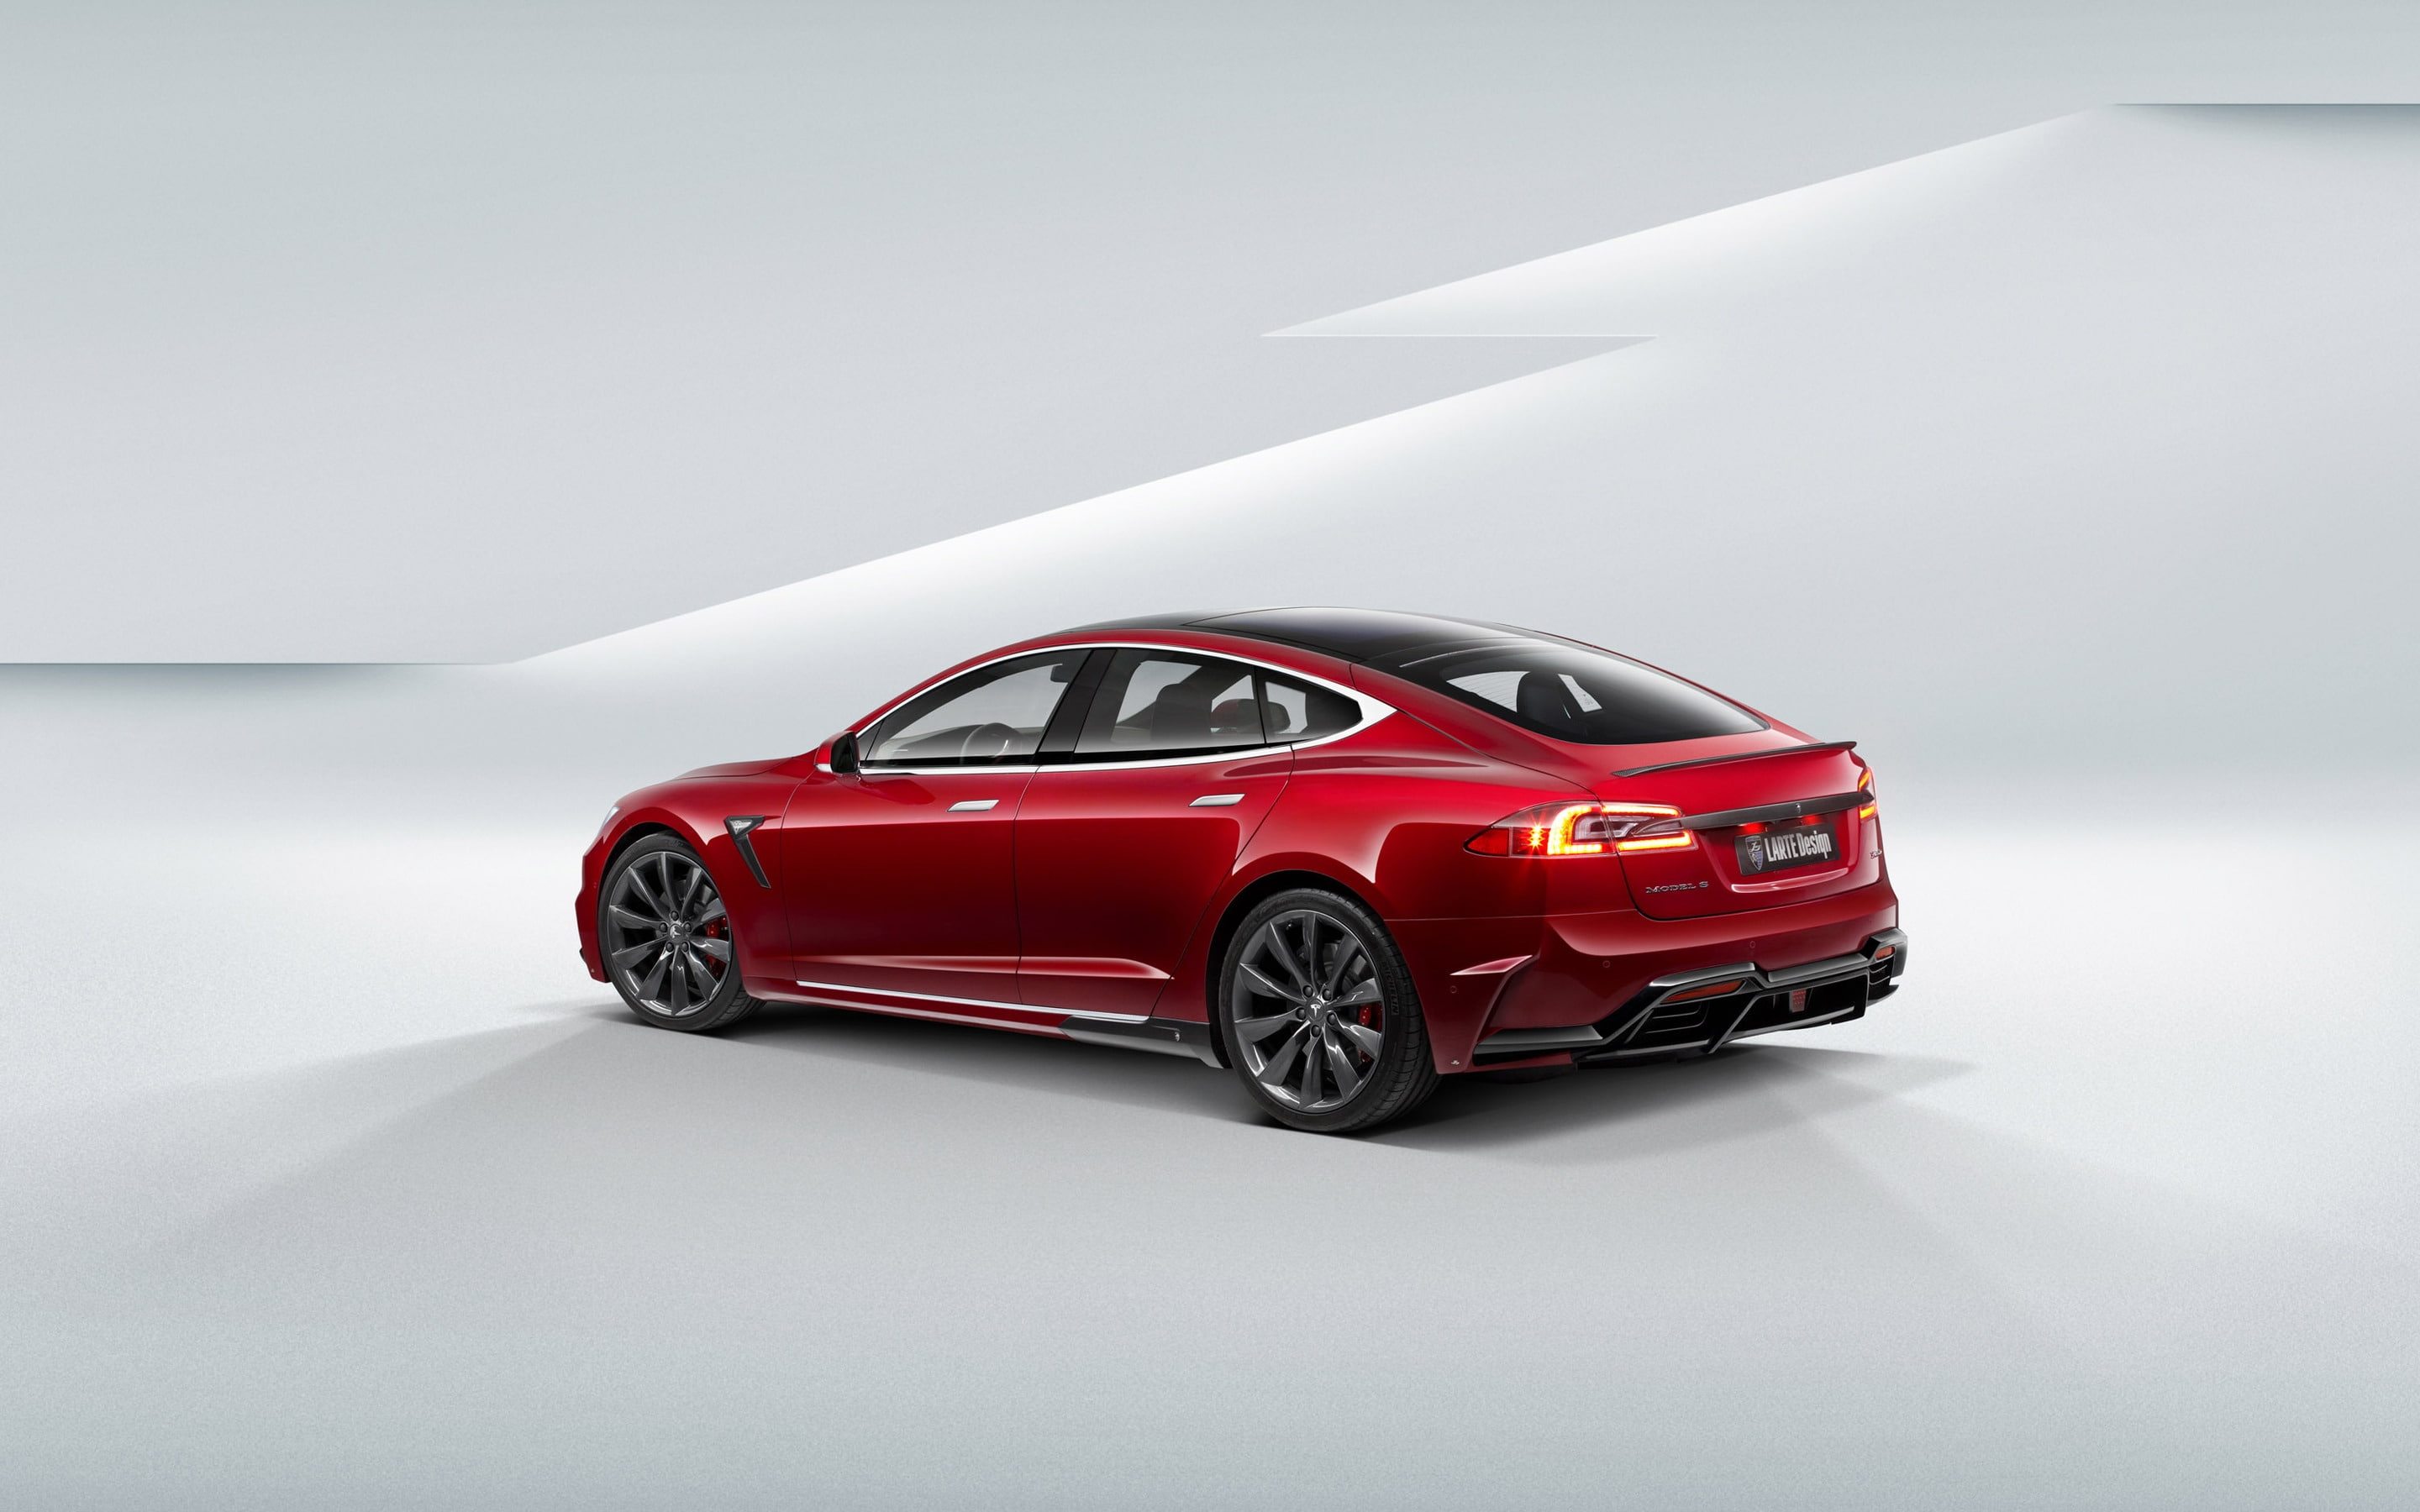 Tesla Model S 2015, red maserati sedan